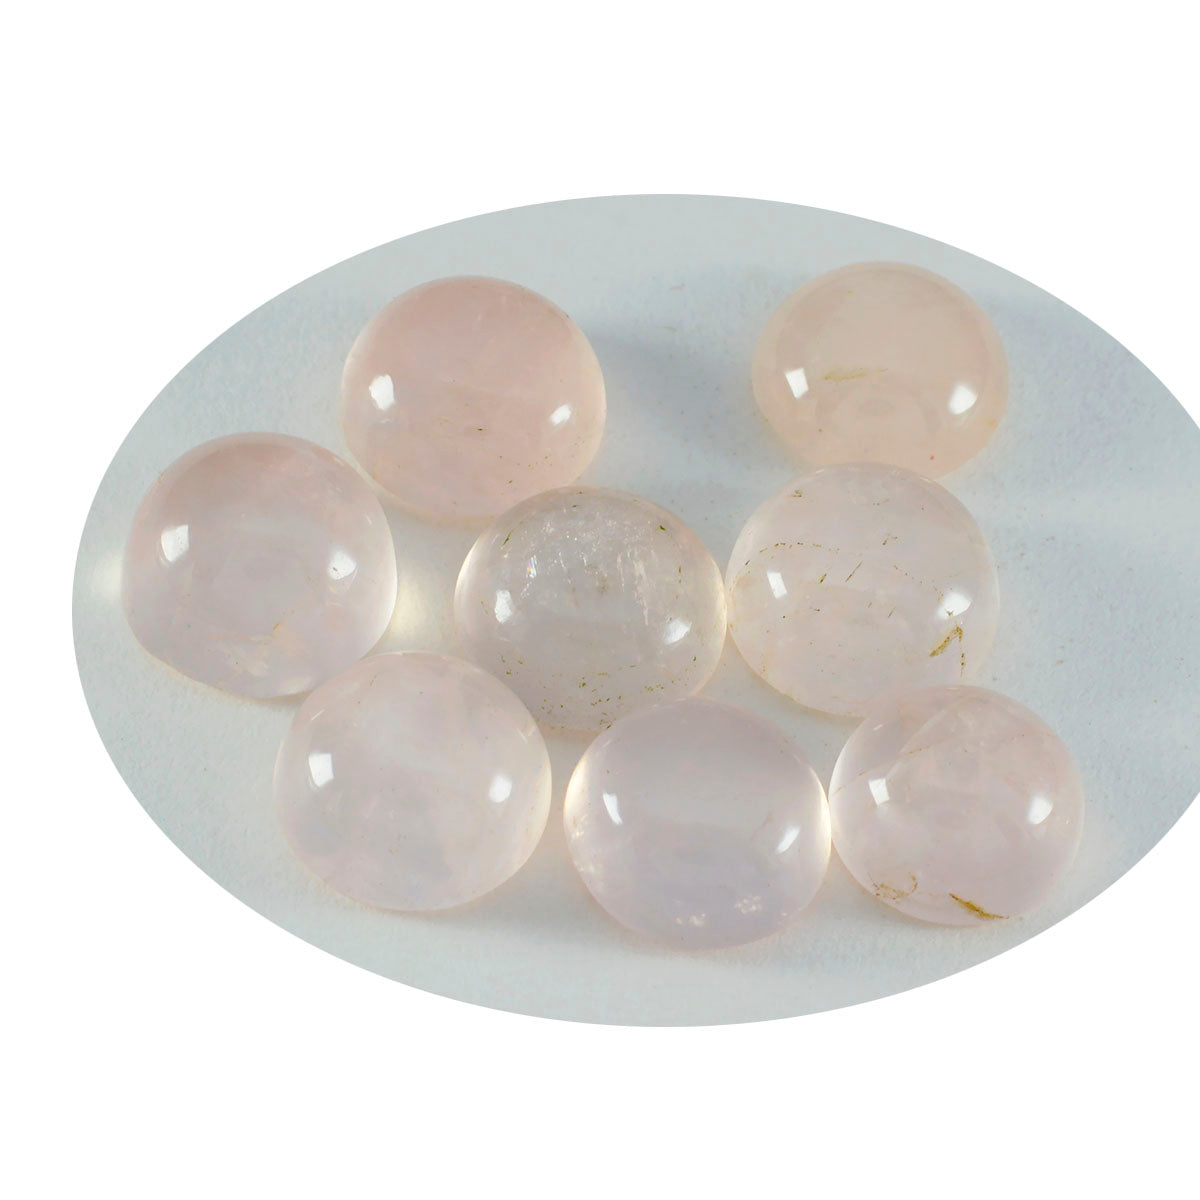 riyogems 1 шт. кабошон из розового кварца 12x12 мм круглой формы, красивый качественный драгоценный камень